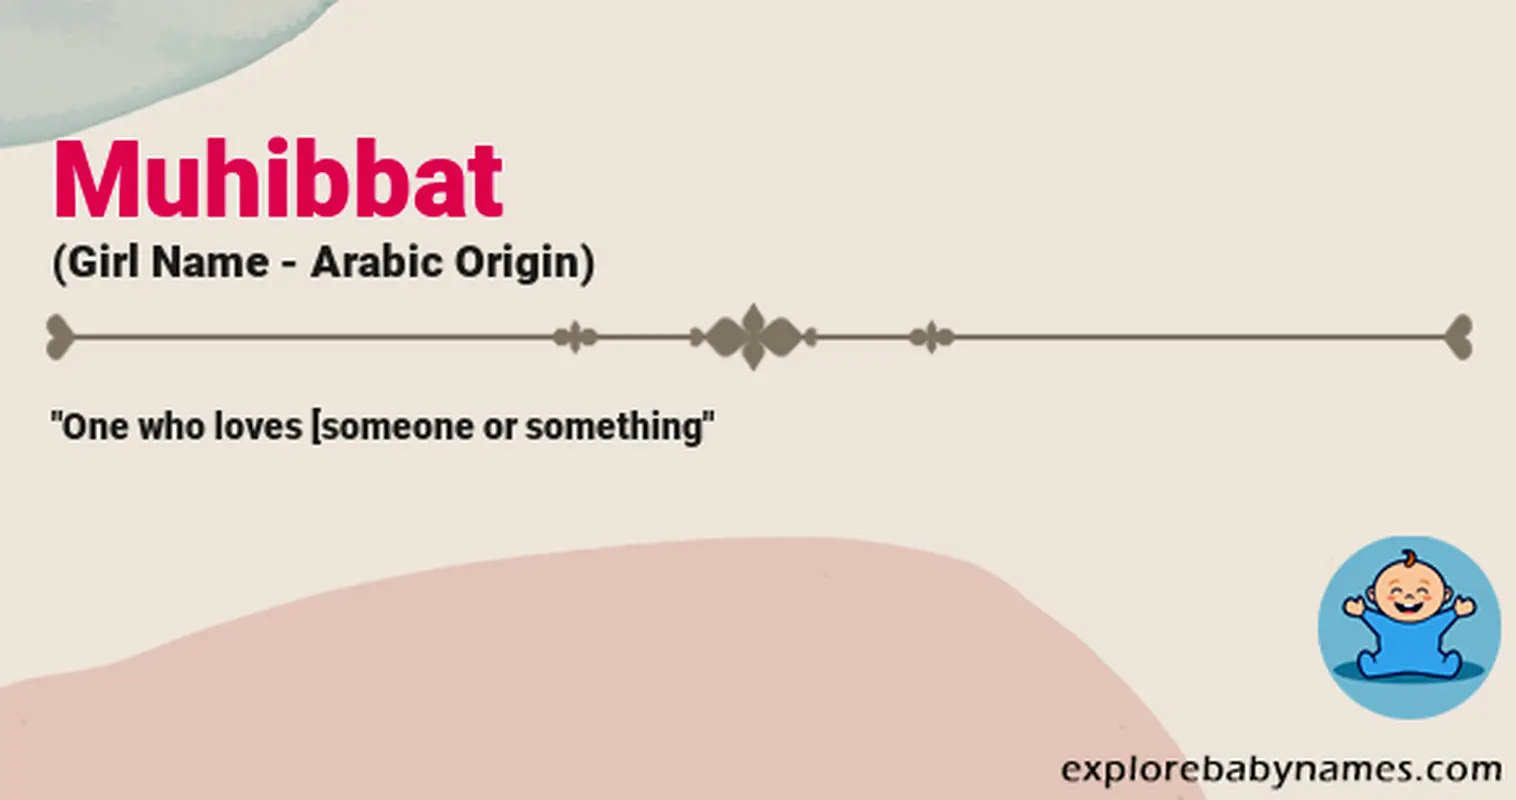 Meaning of Muhibbat